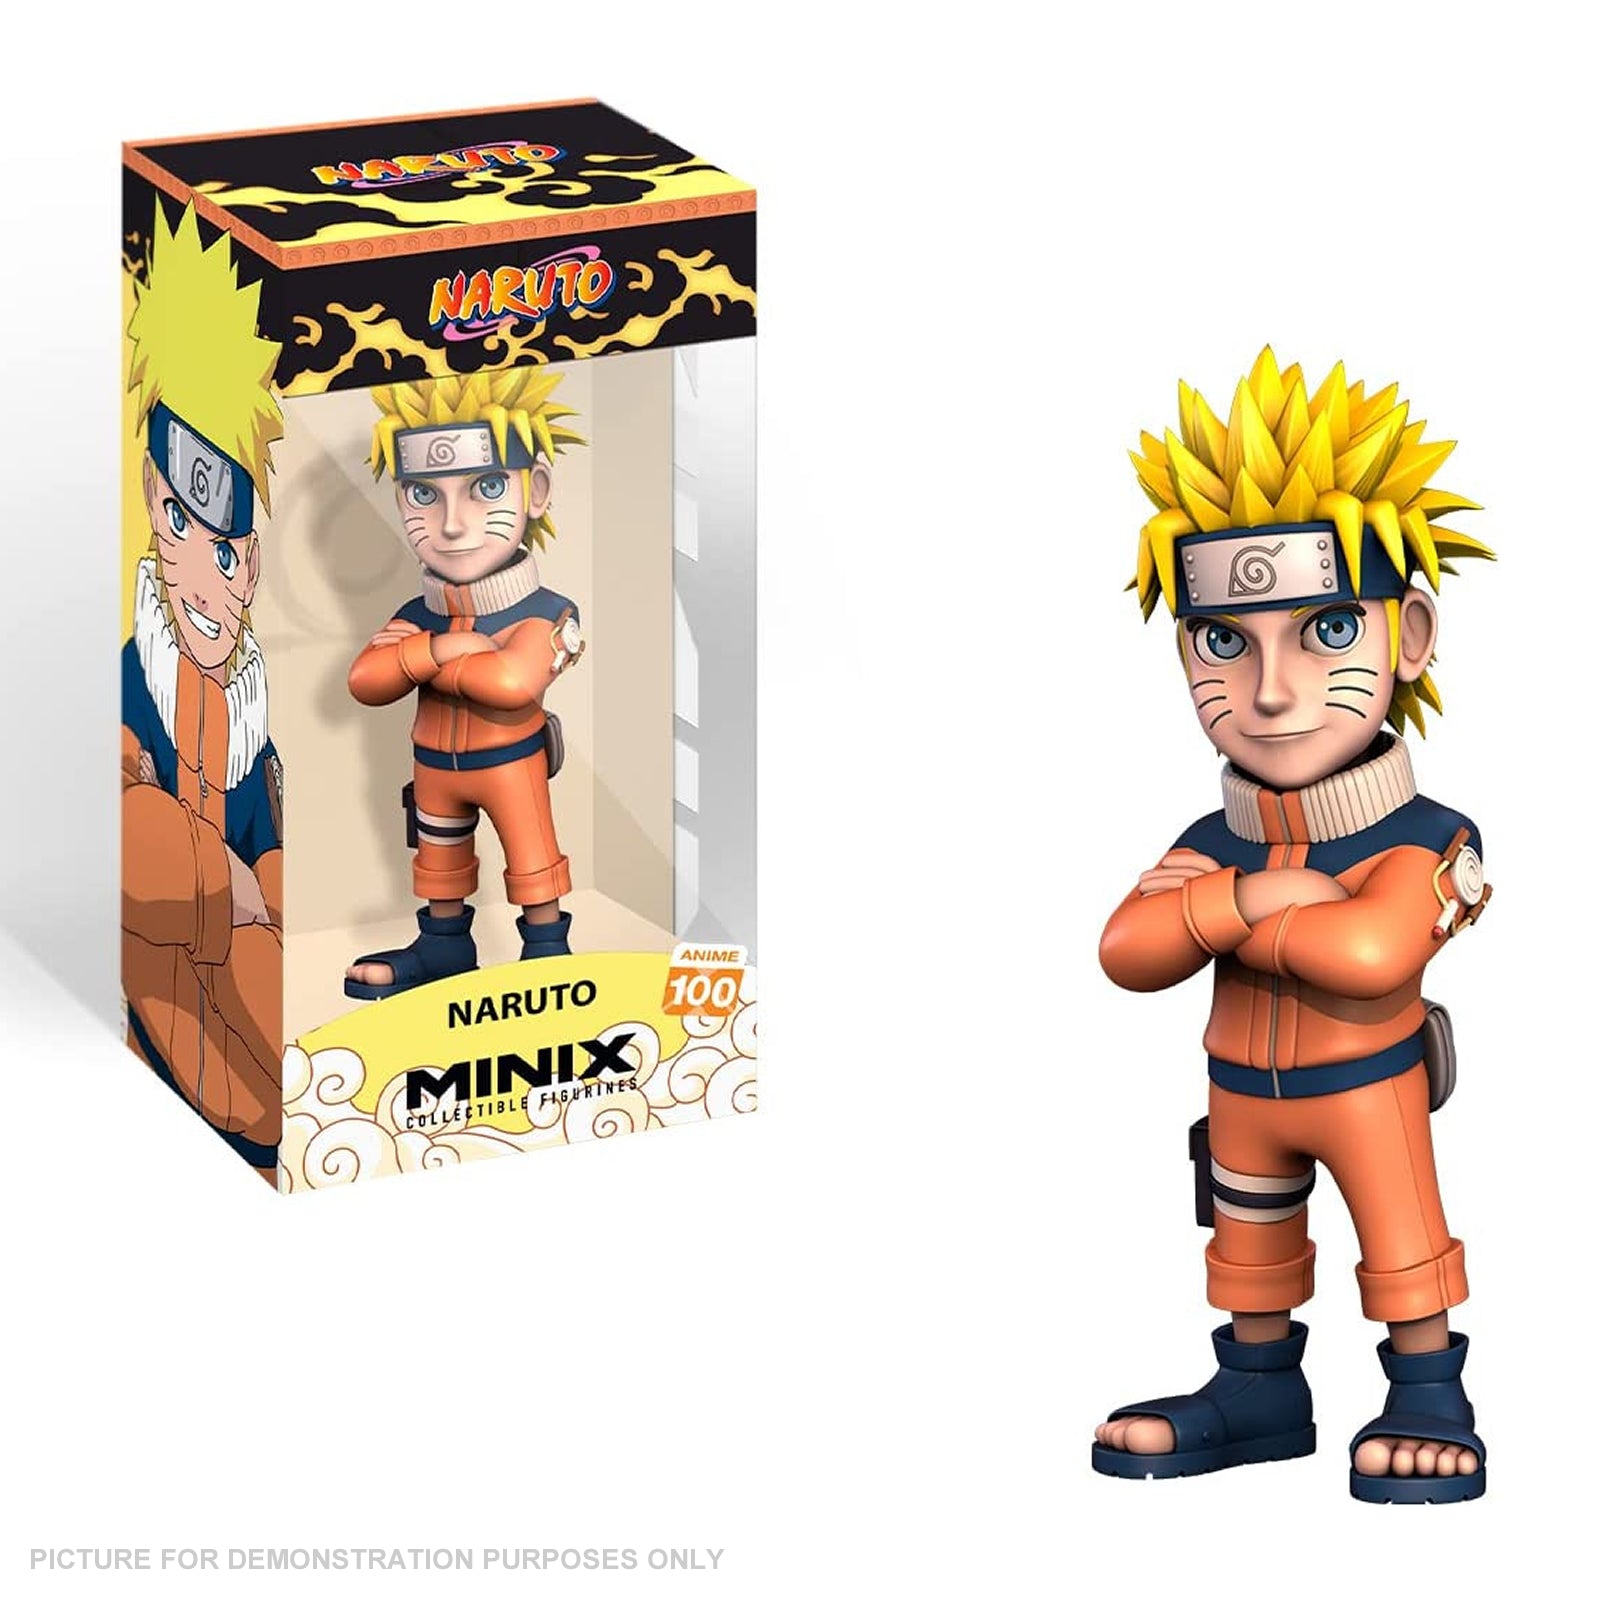 MINIX Collectable Figurine - NARUTO - Naruto